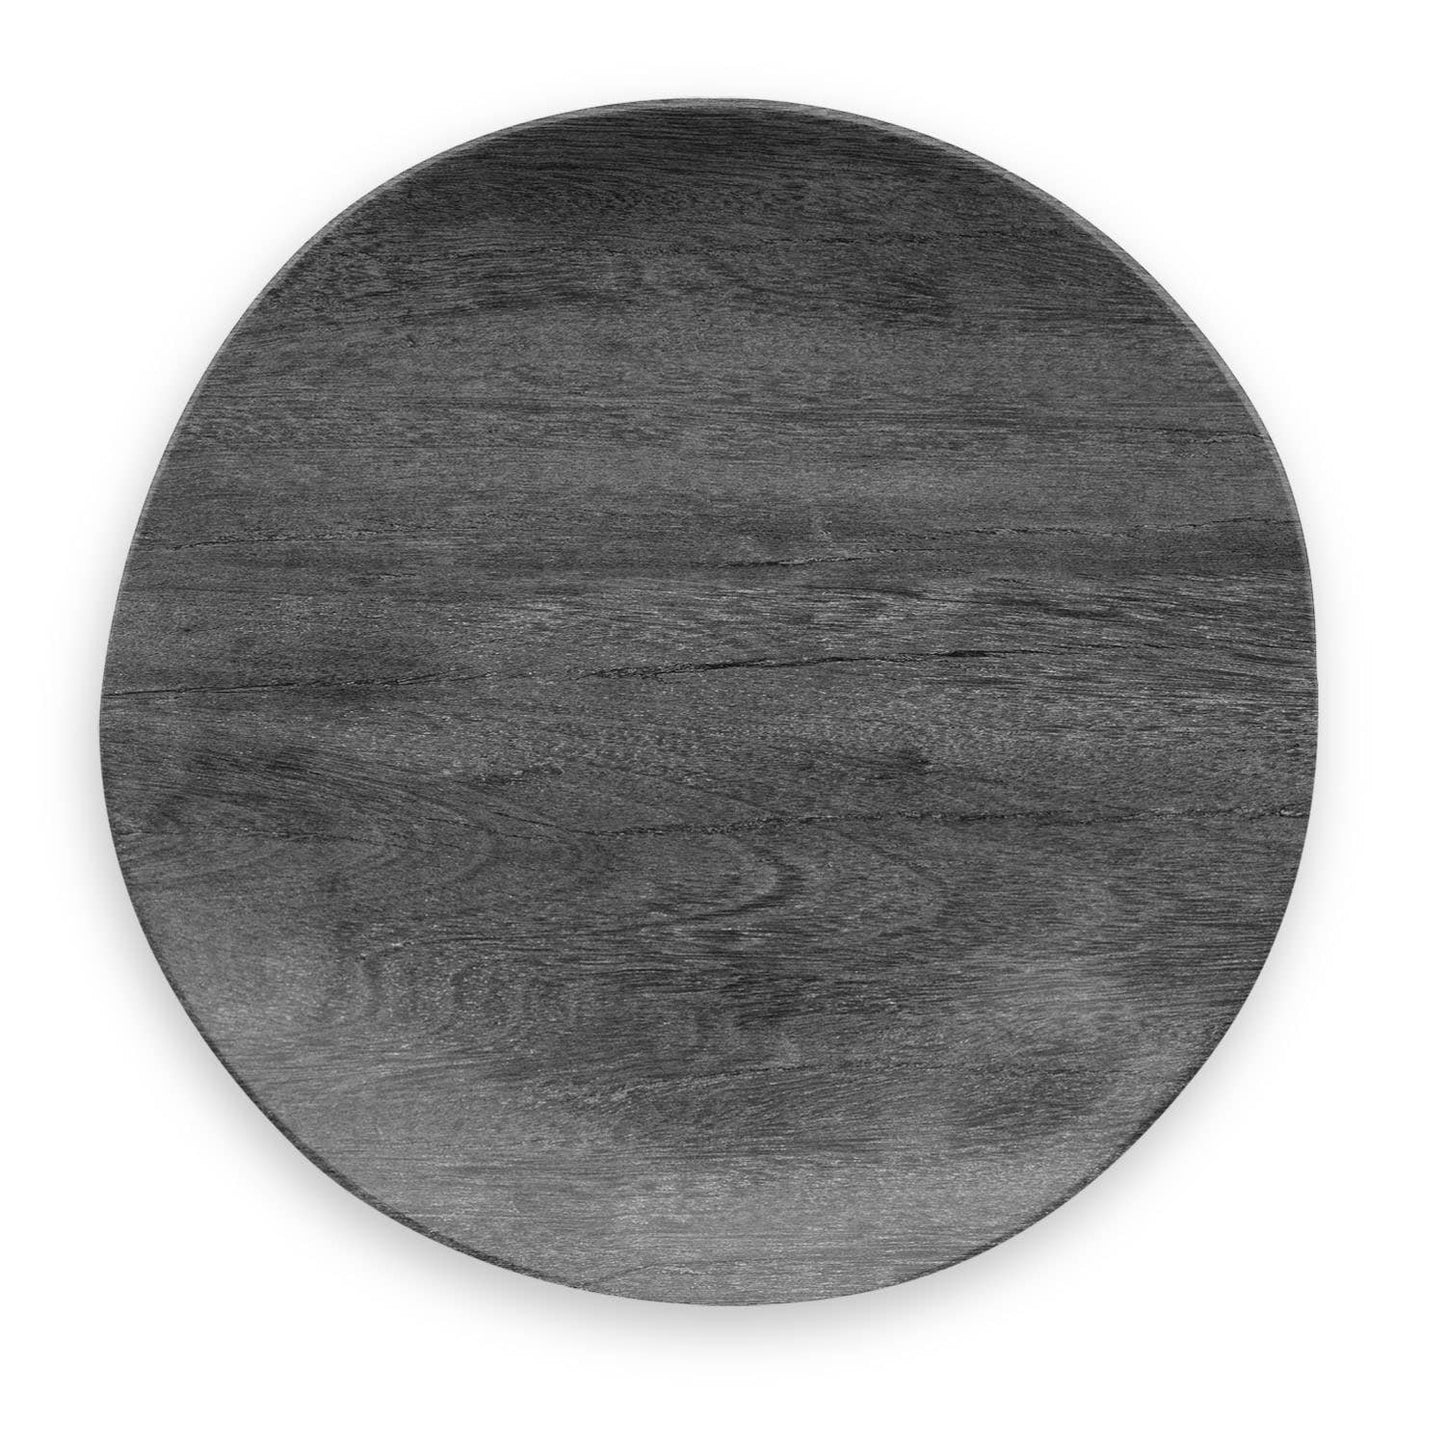 Plant Based Melamine "Blackened Wood" Dinner Plate 10.5"